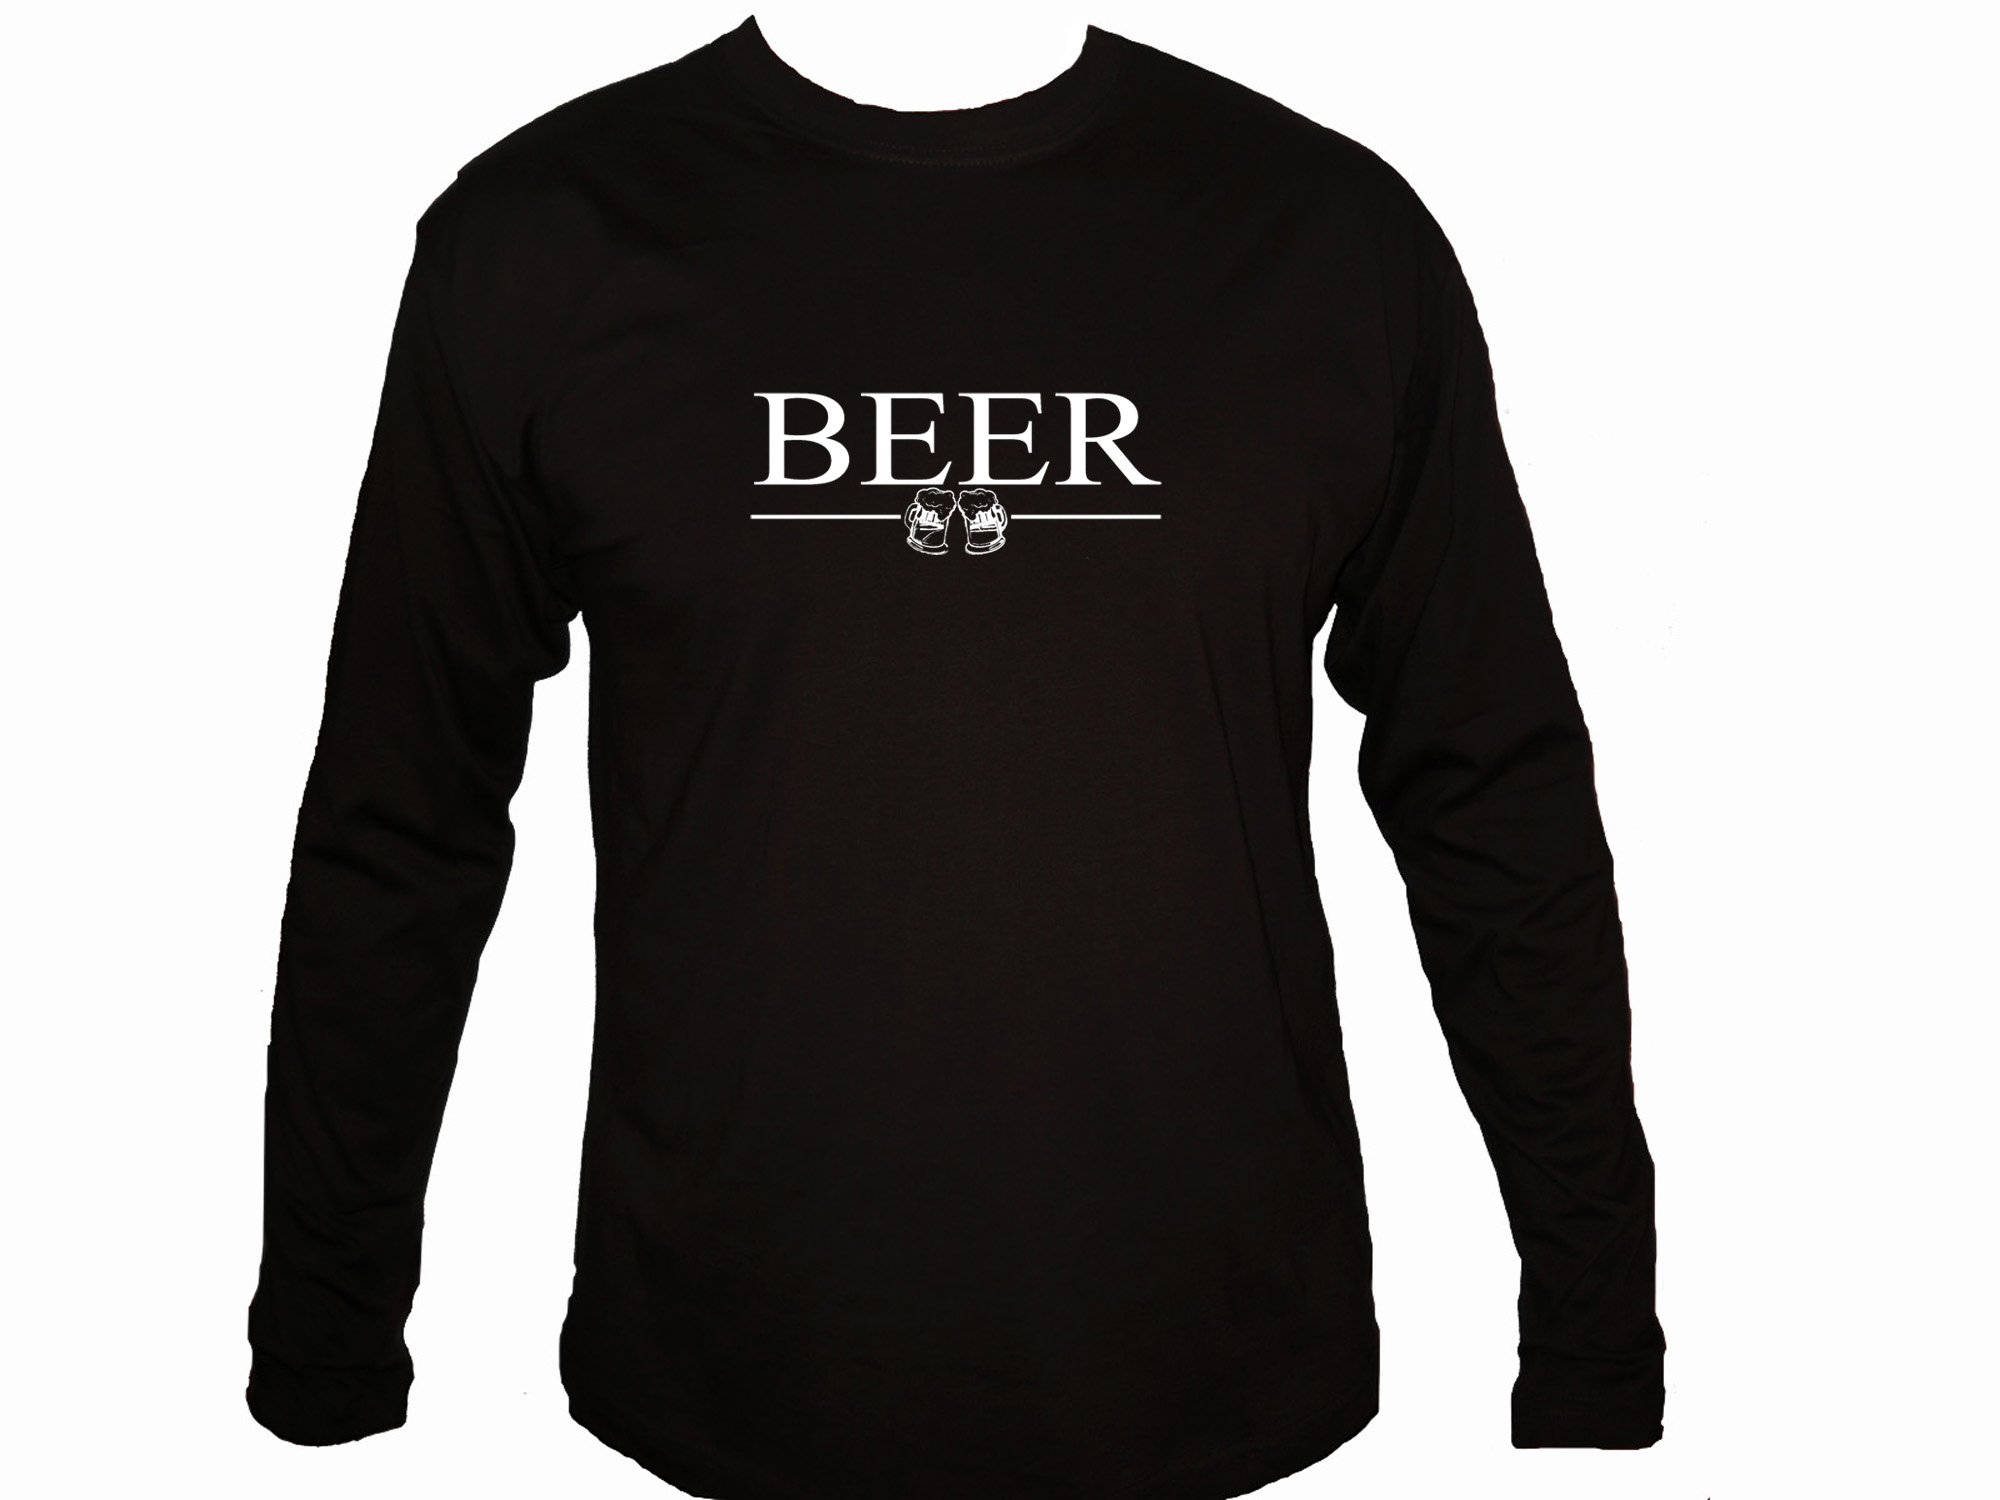 Beer brewery long sleeves t-shirt